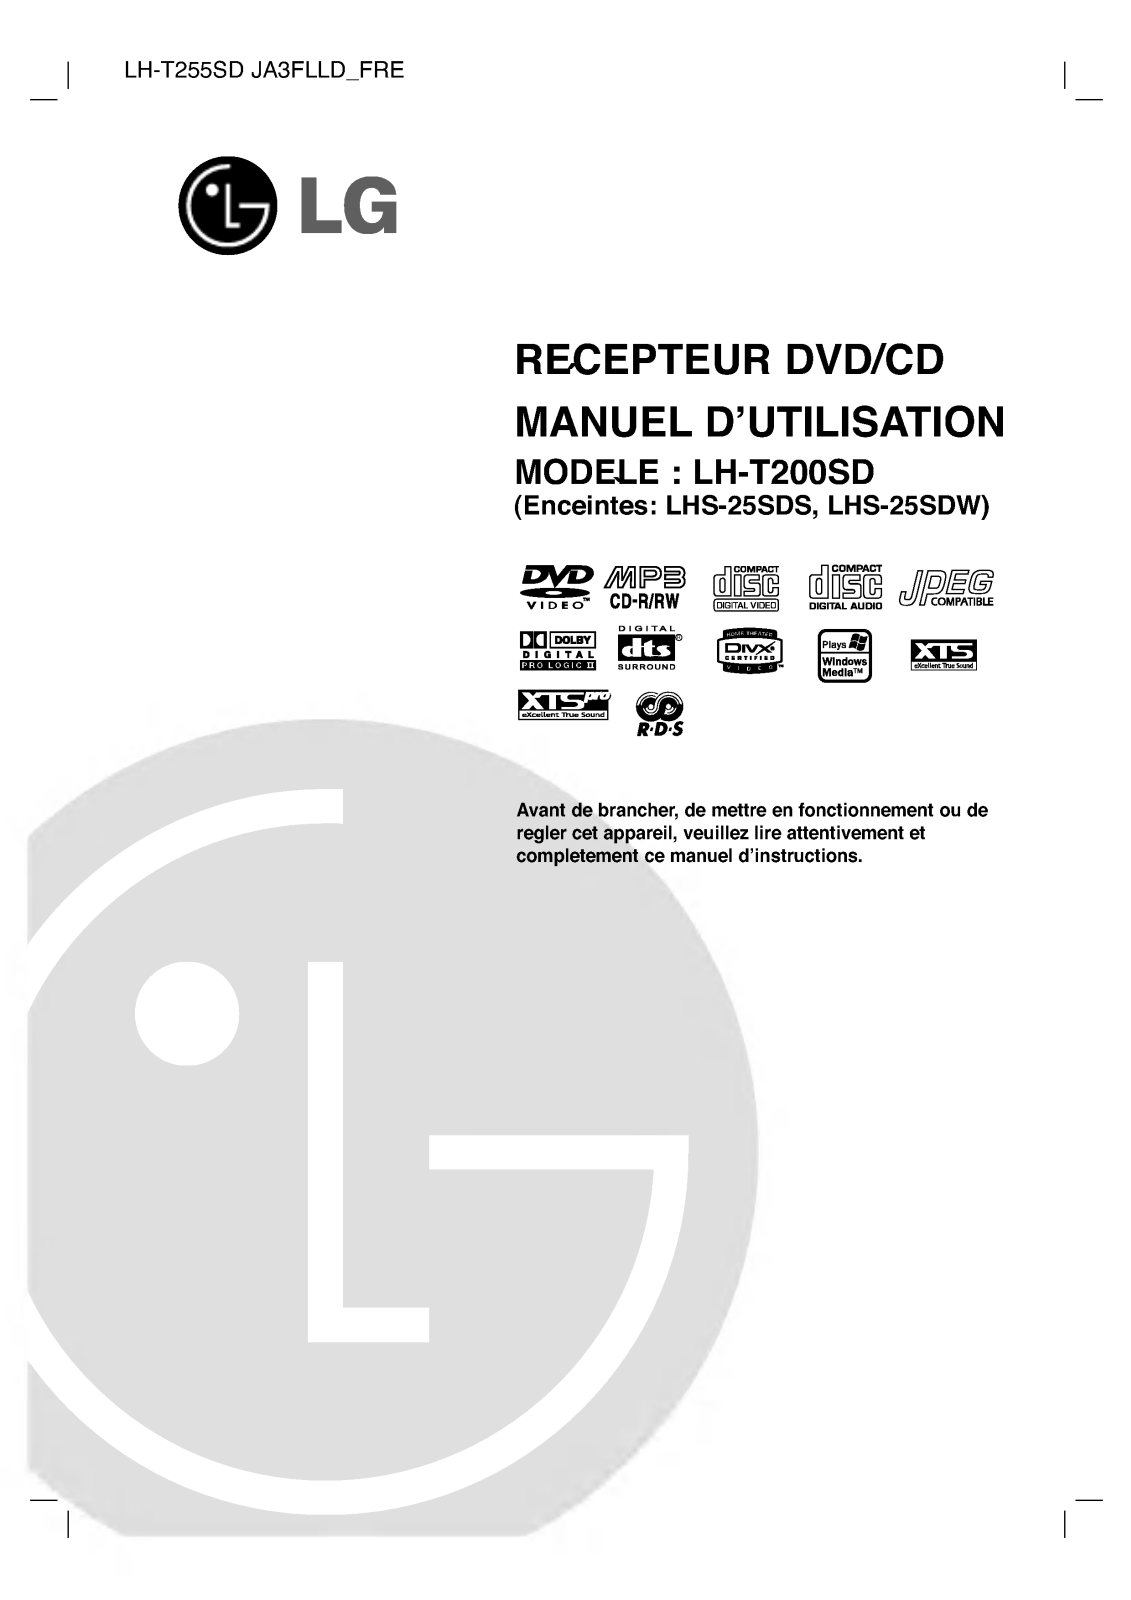 LG LH-T200SD User Manual